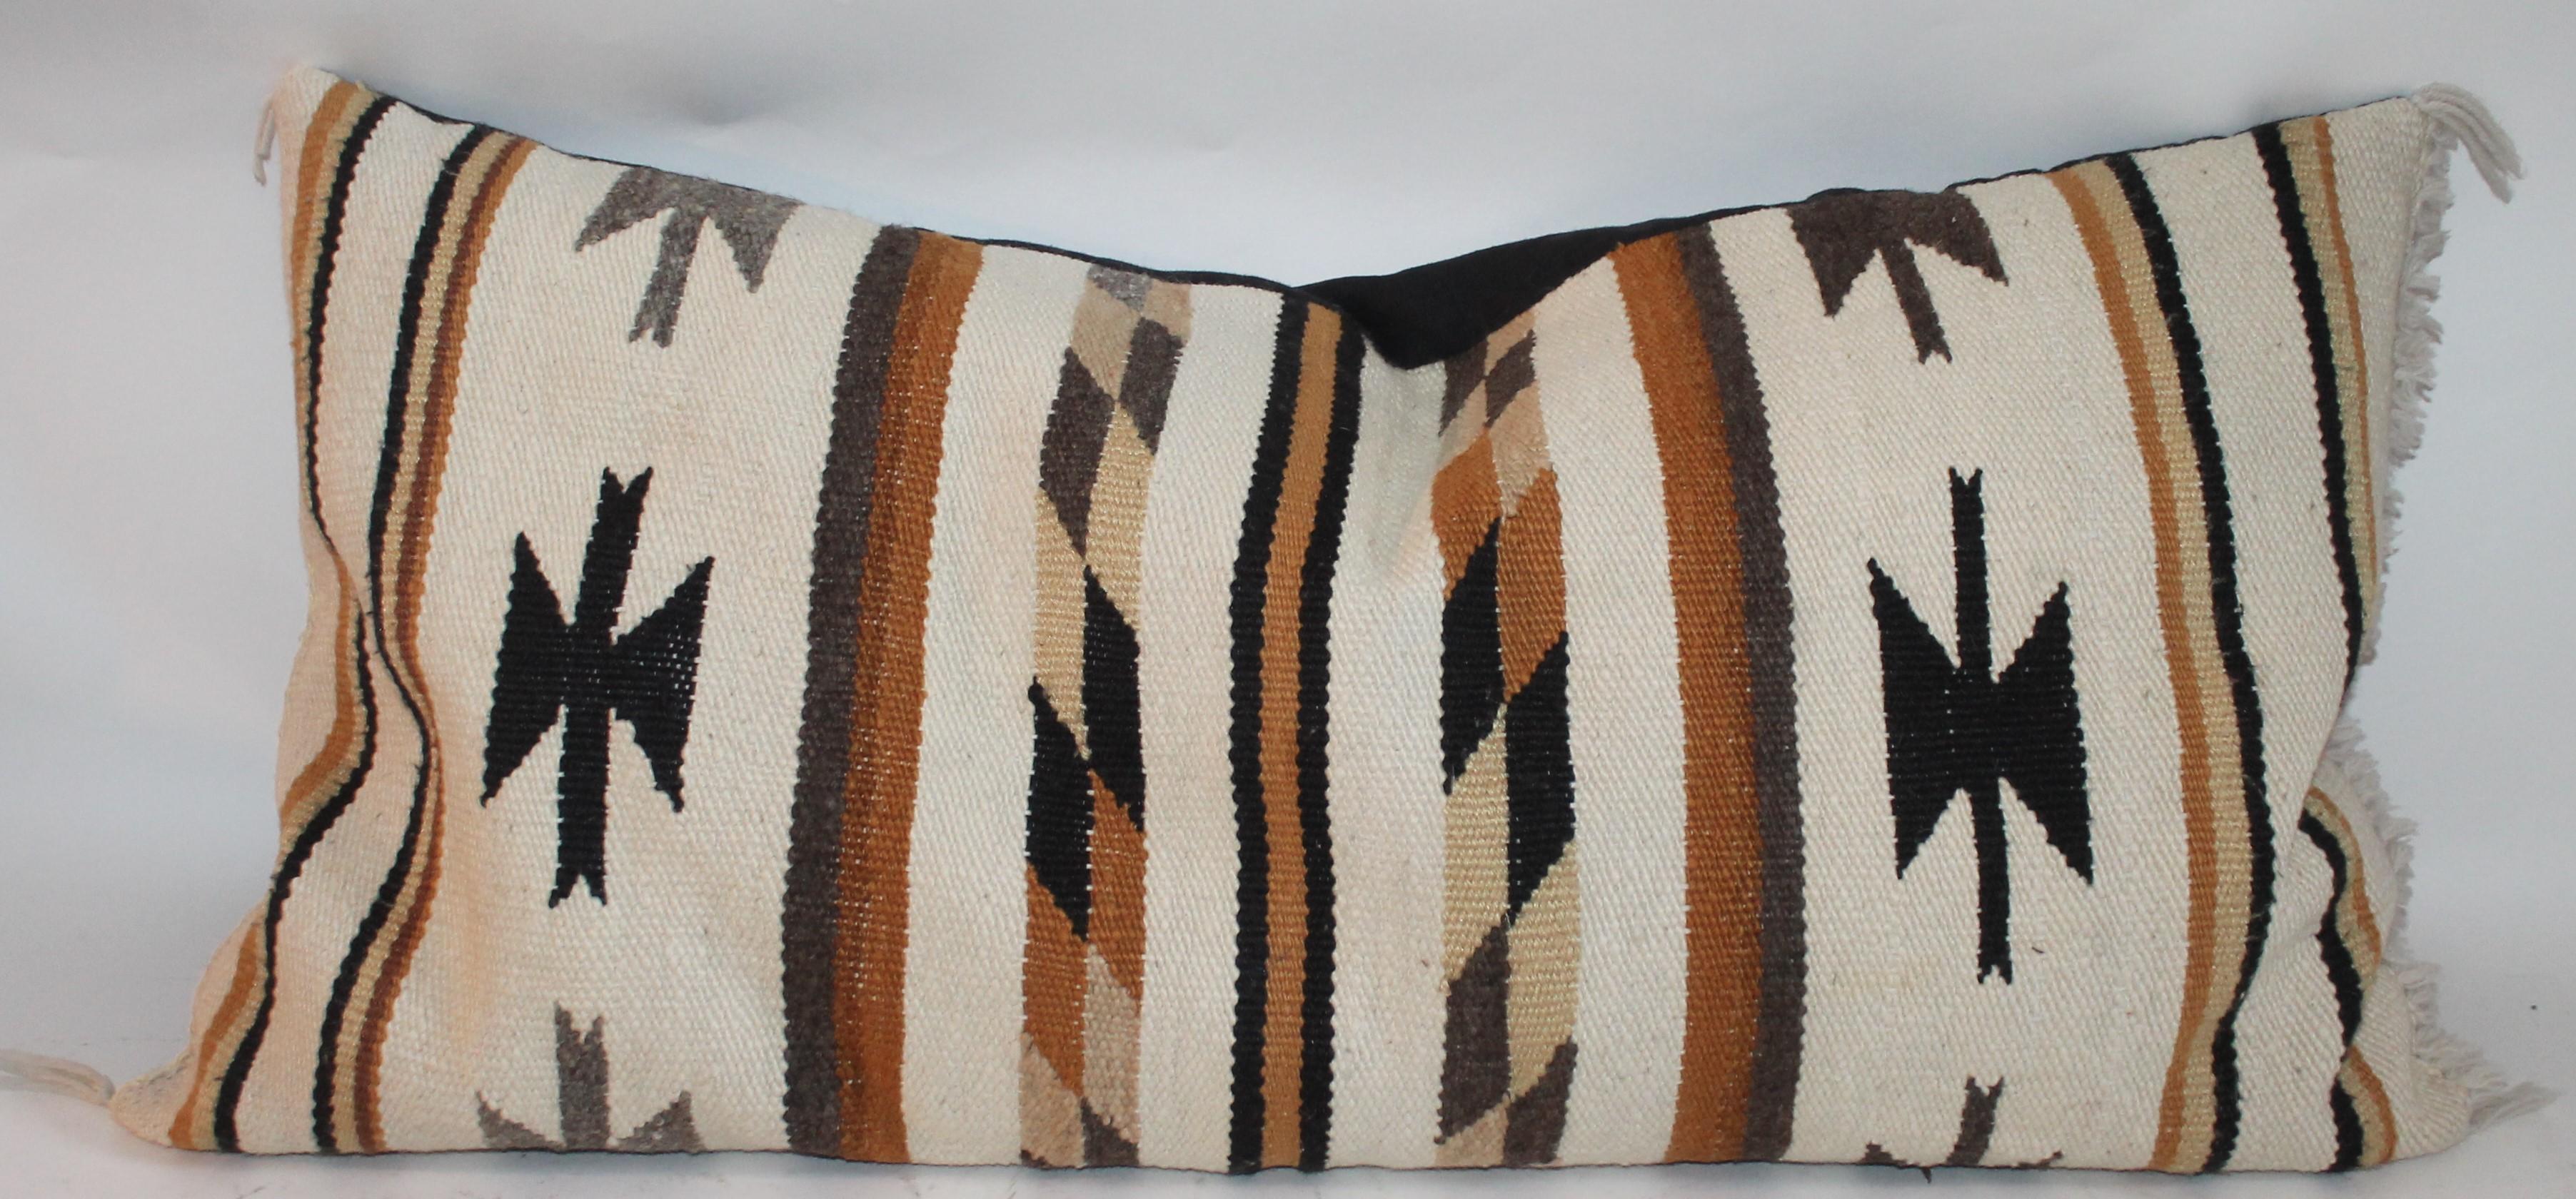 Adirondack Navajo Indian Weaving Pillows, Collection of Five